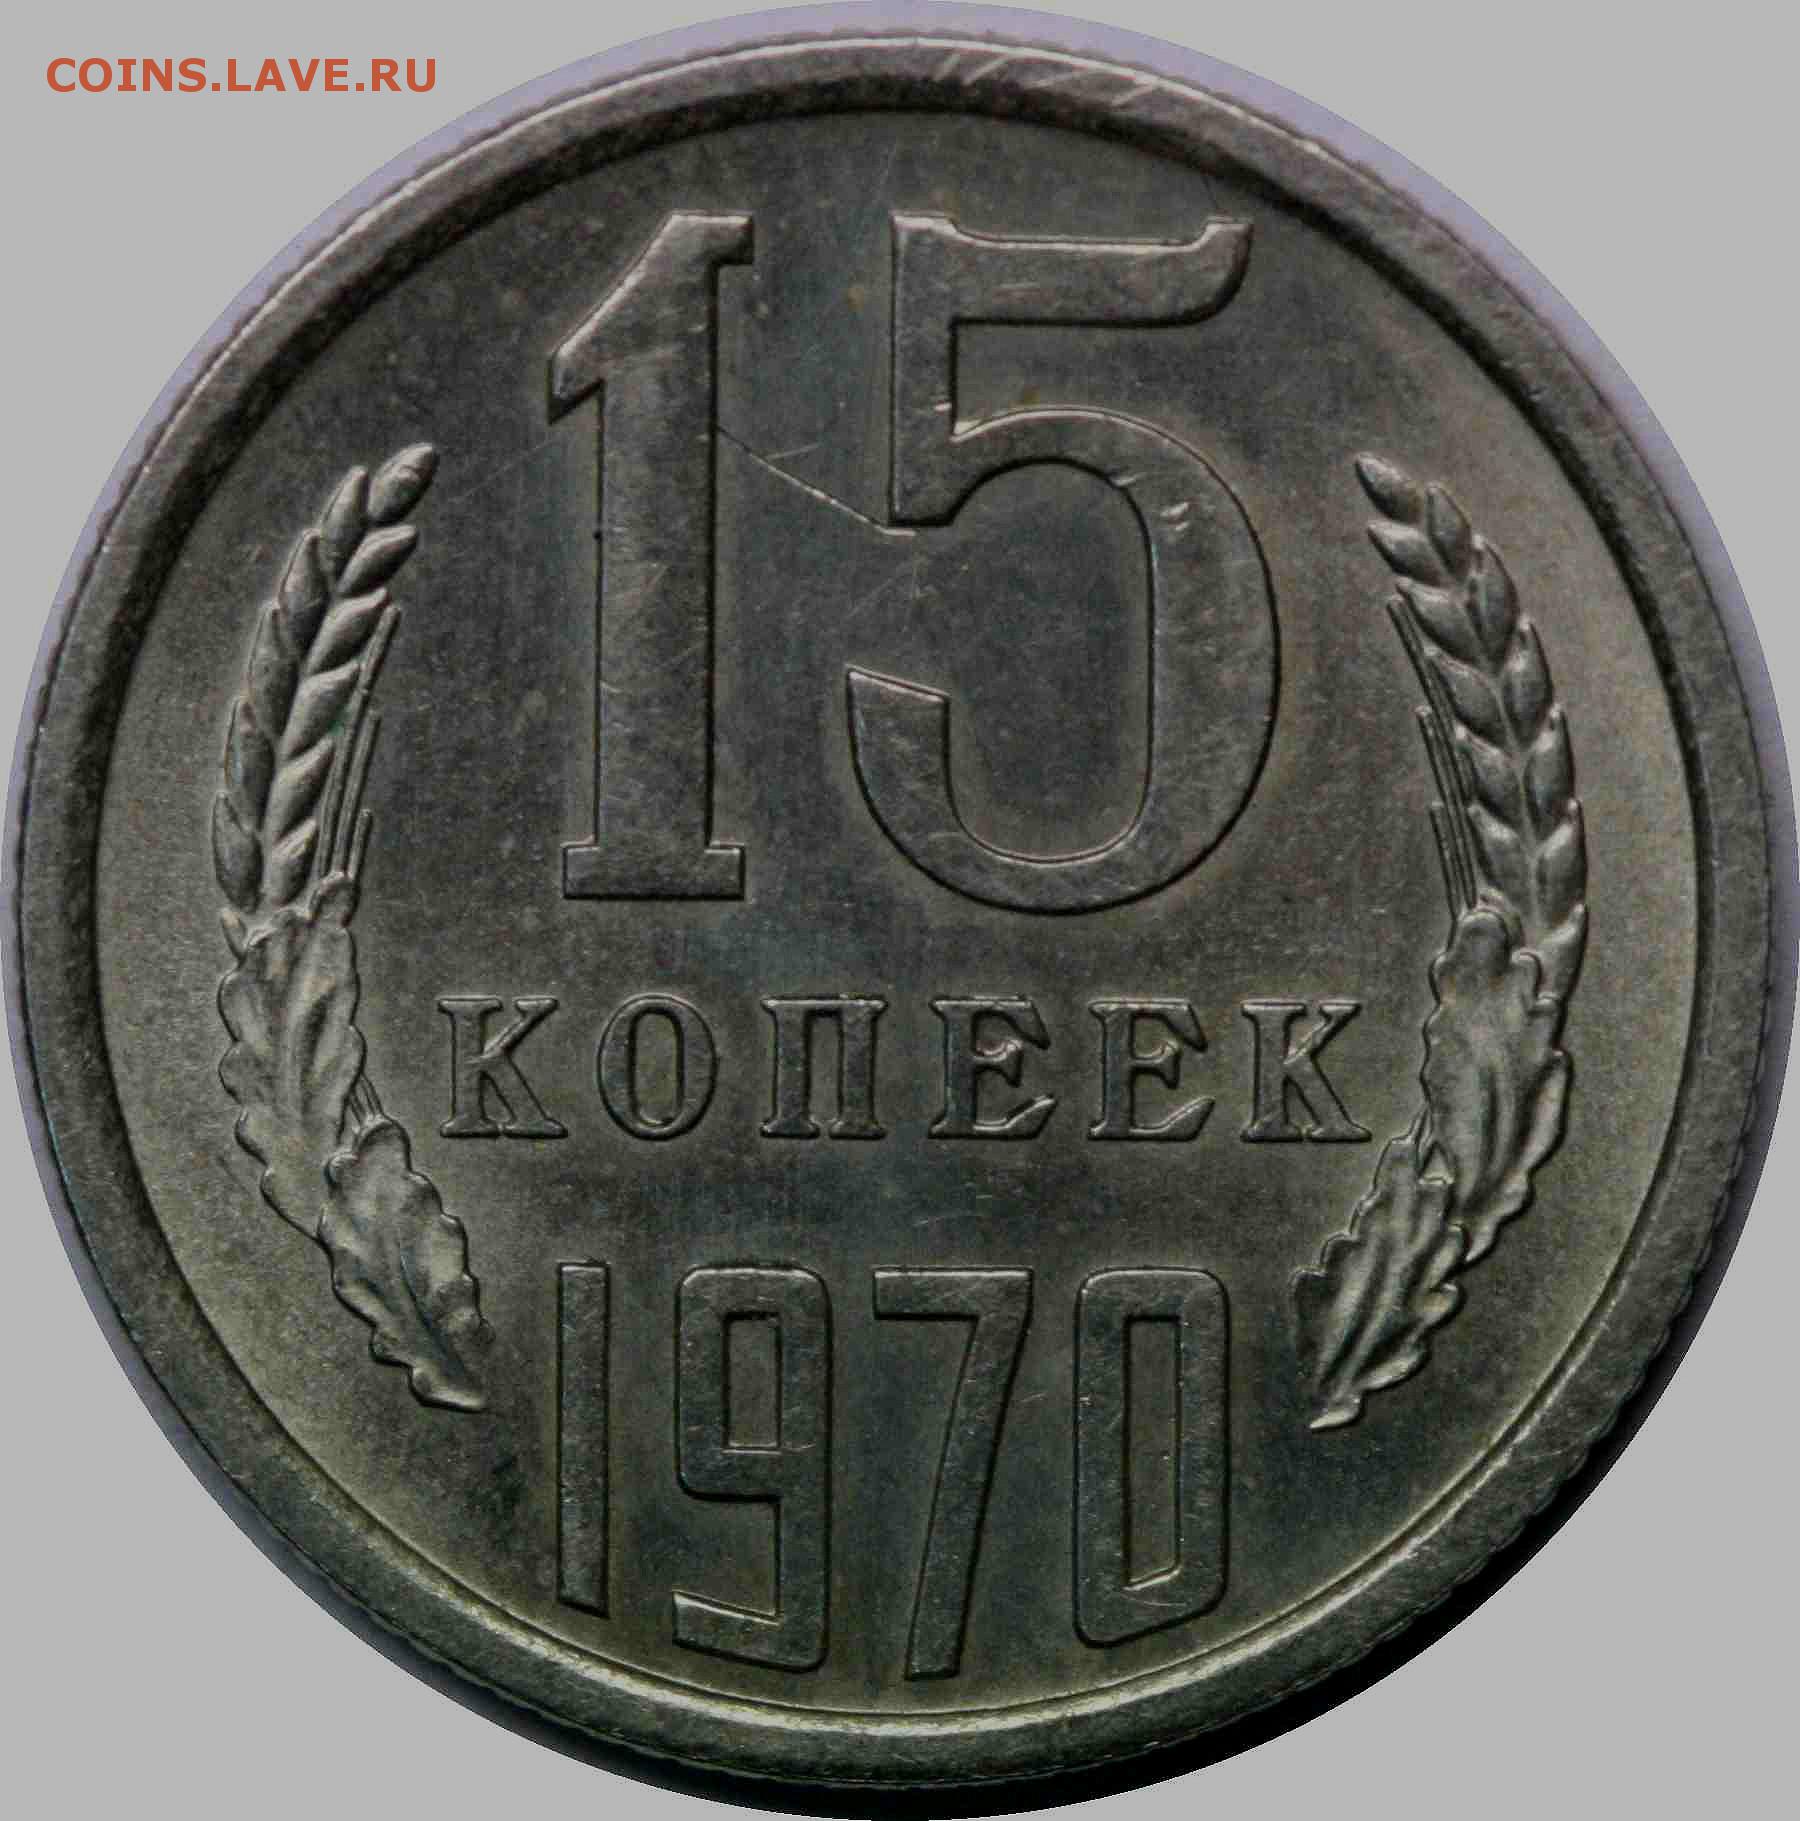 Цена 5 копеек 1961 ссср. Монеты 15 копеек СССР 1961. СССР монета копеек 1961. 15 Копеек 1971. 15 Копеек СССР 1961 года.